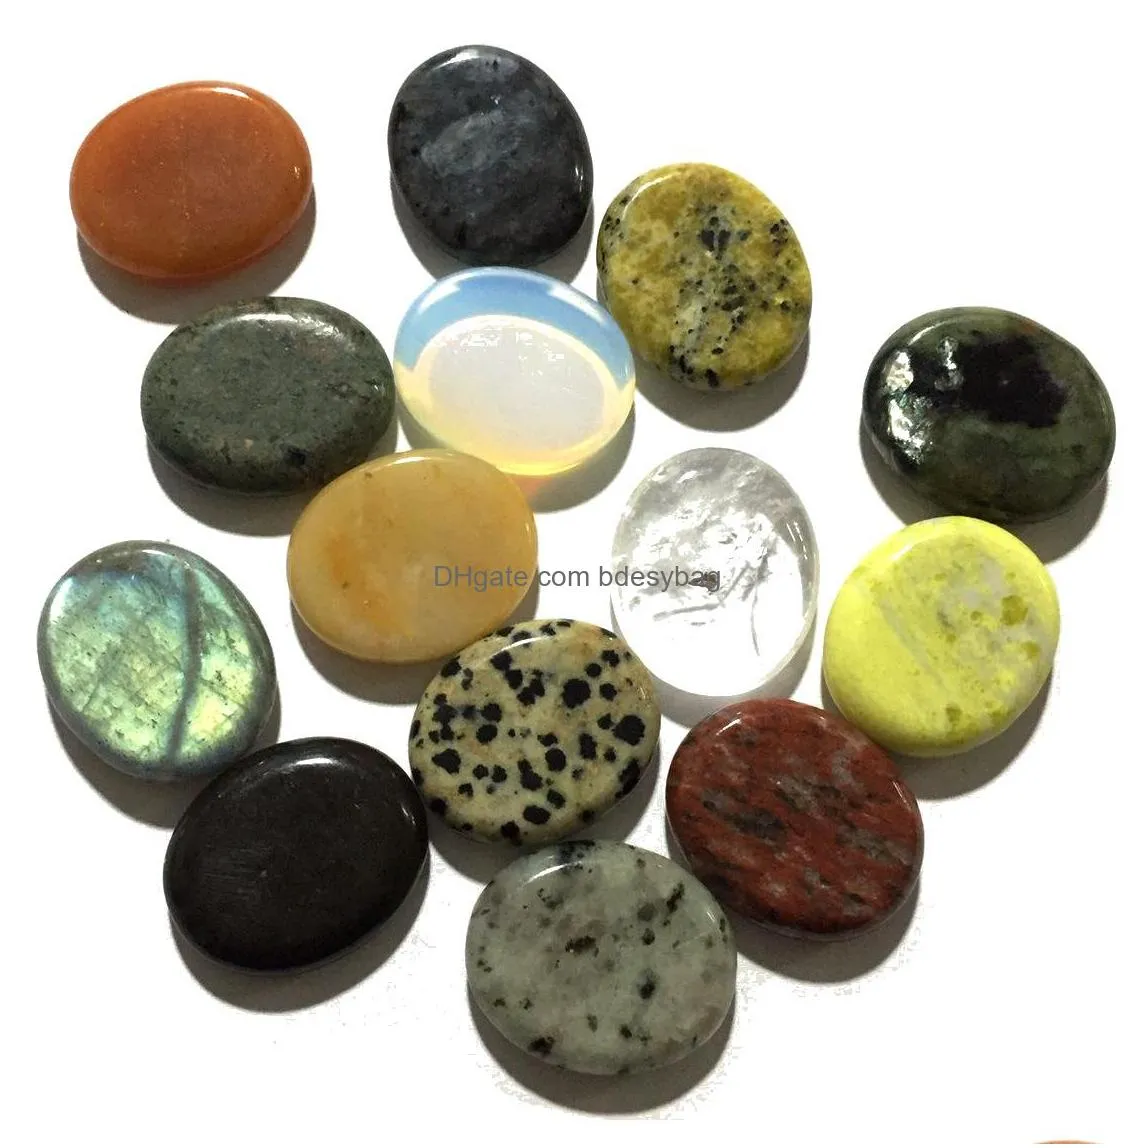 25x30mm worry stone thumb gemstone natural healing crystals therapy reiki treatment spiritual minerals massage palm gem